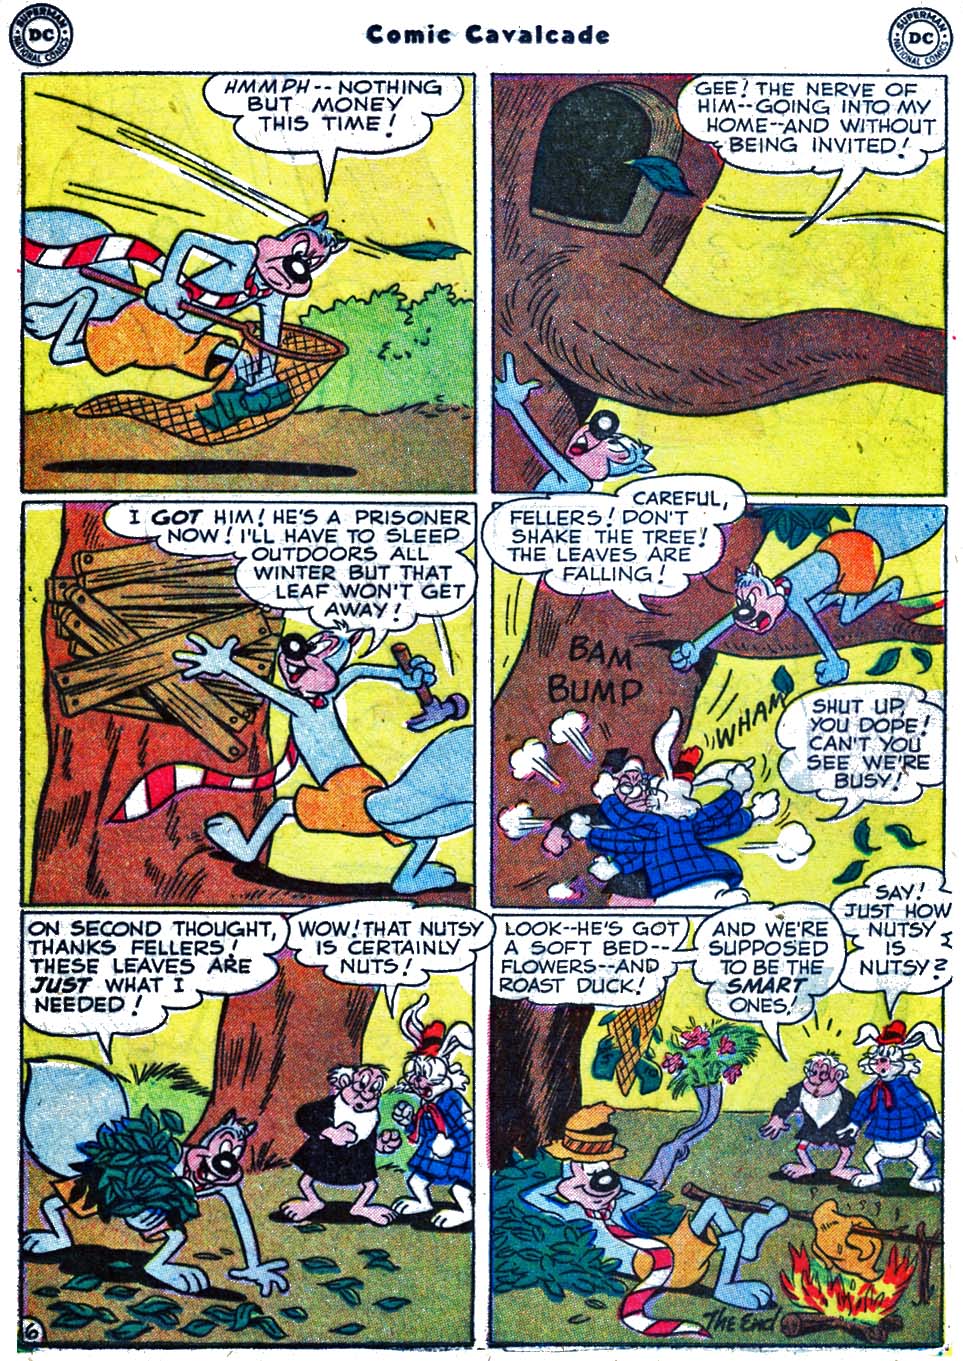 Comic Cavalcade issue 47 - Page 40